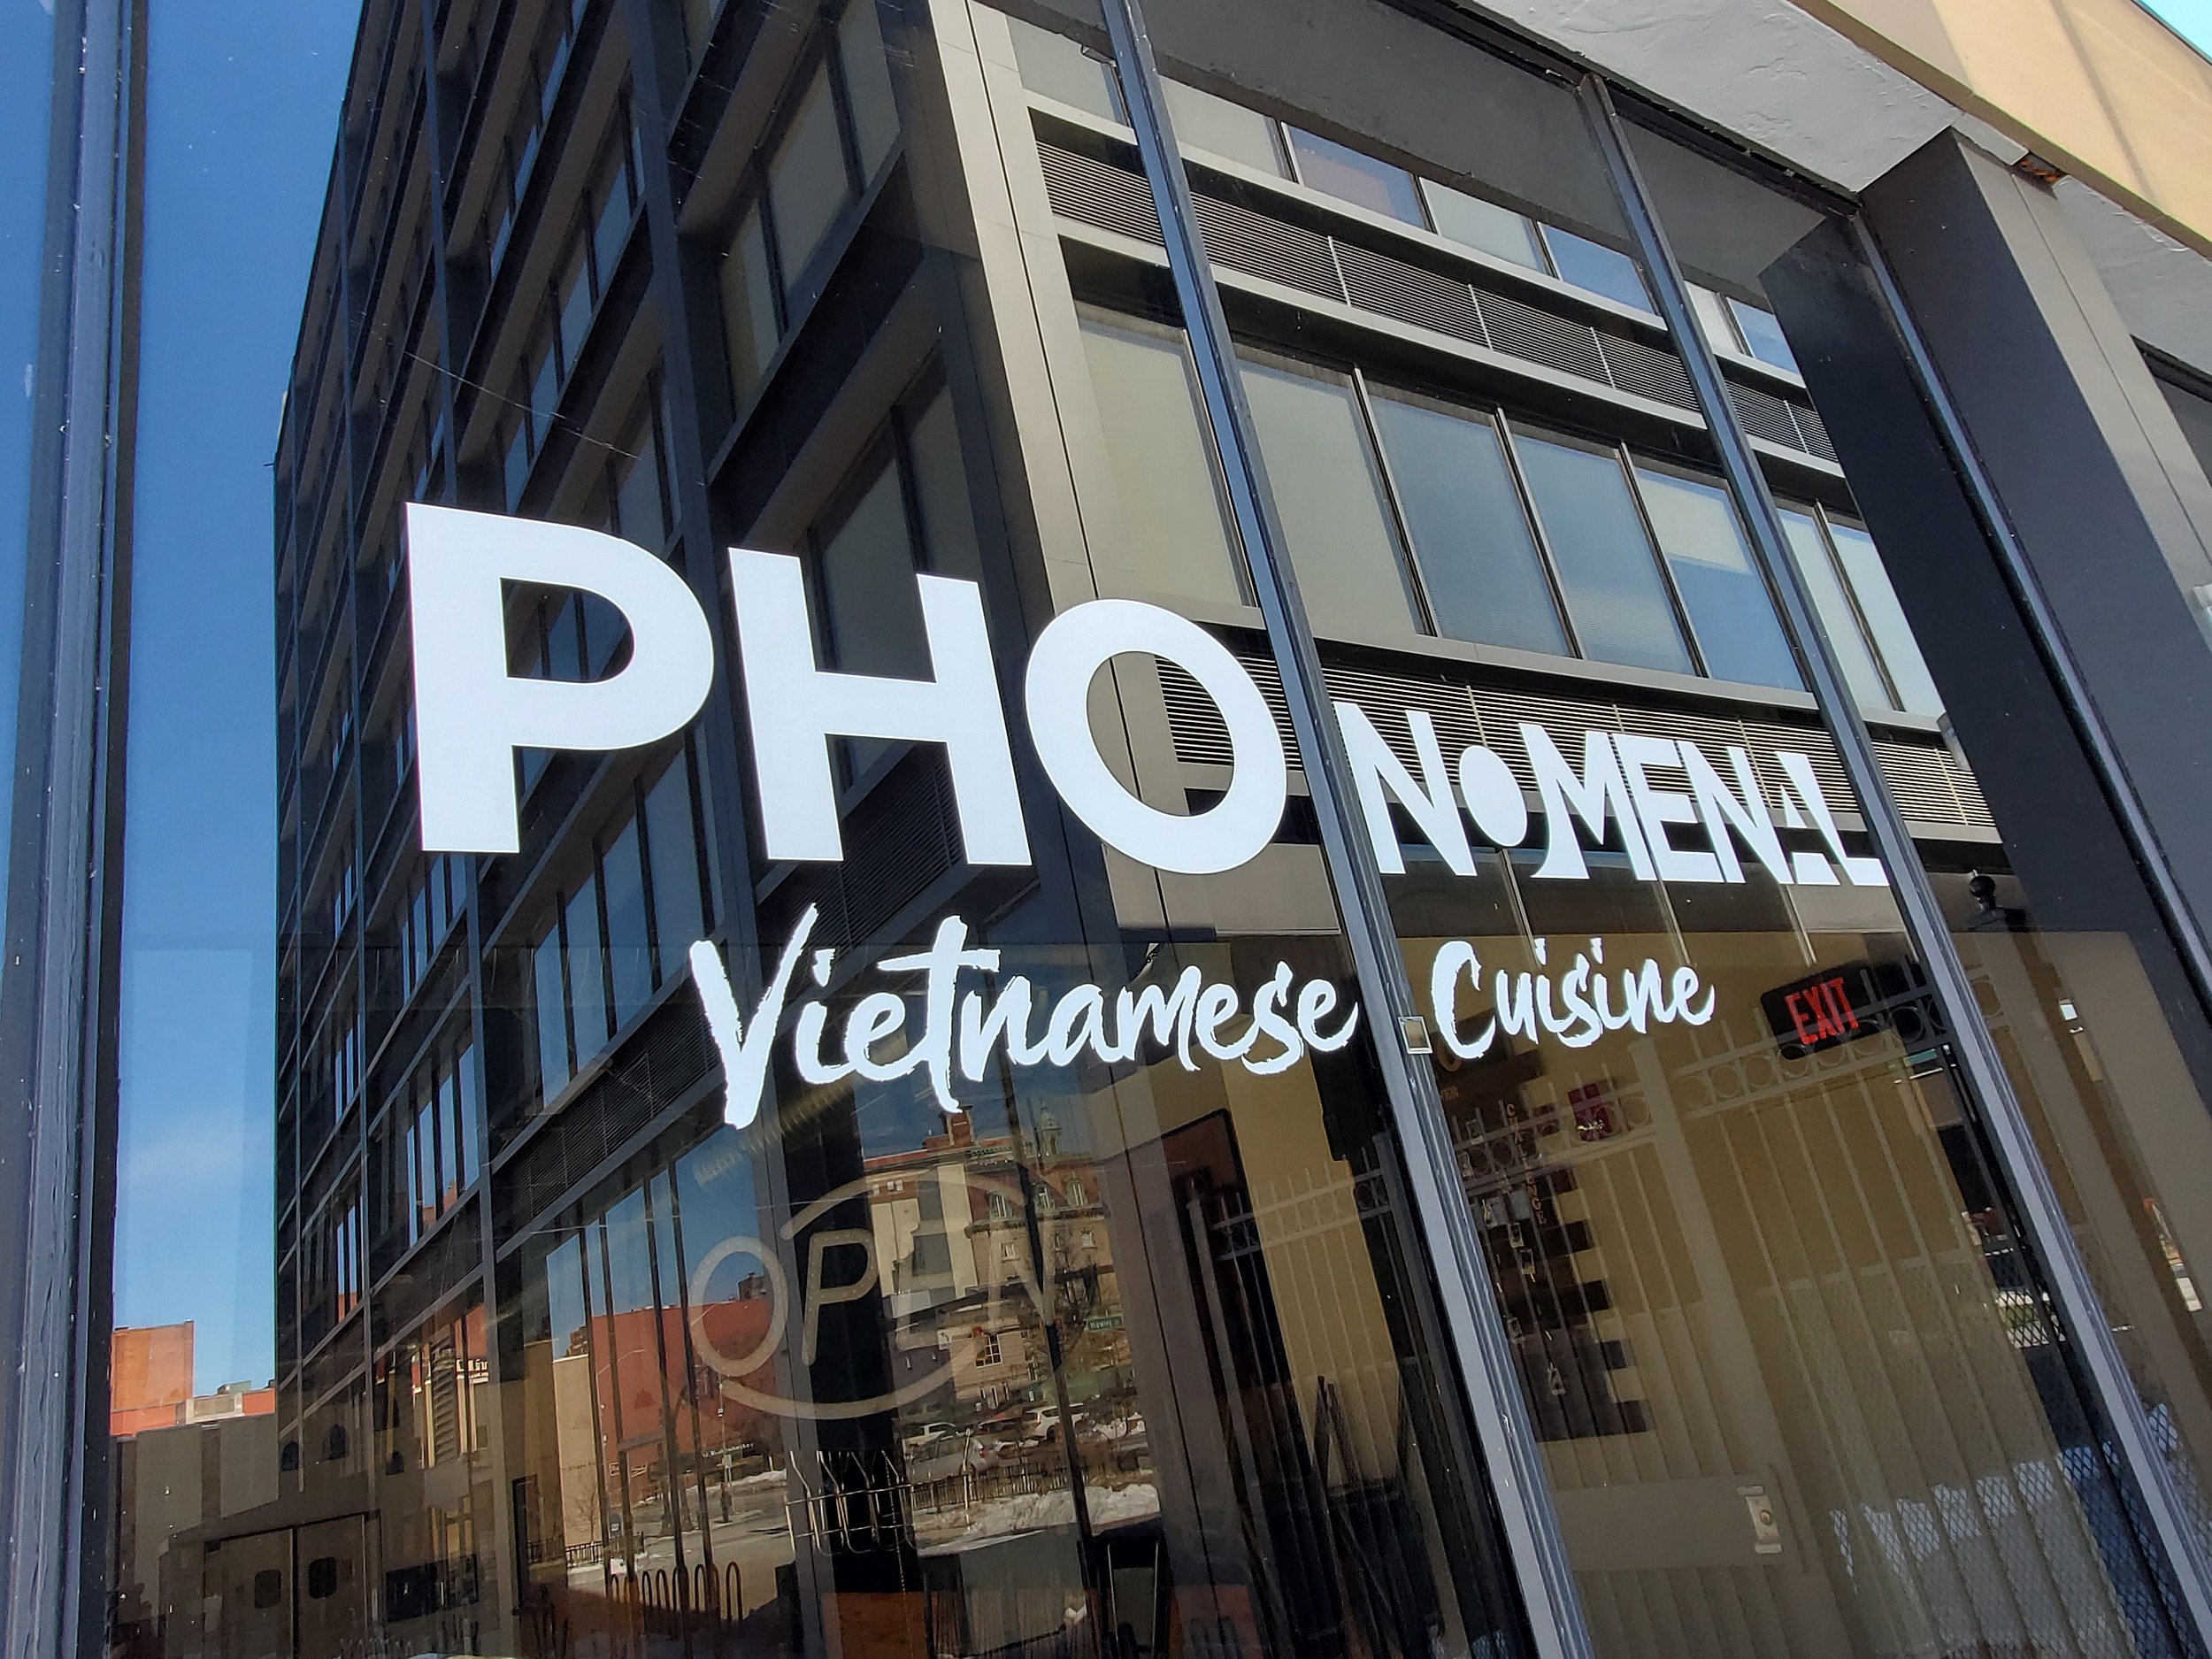 Downtown Binghamton Vietnamese Restaurant About to Make Debut image